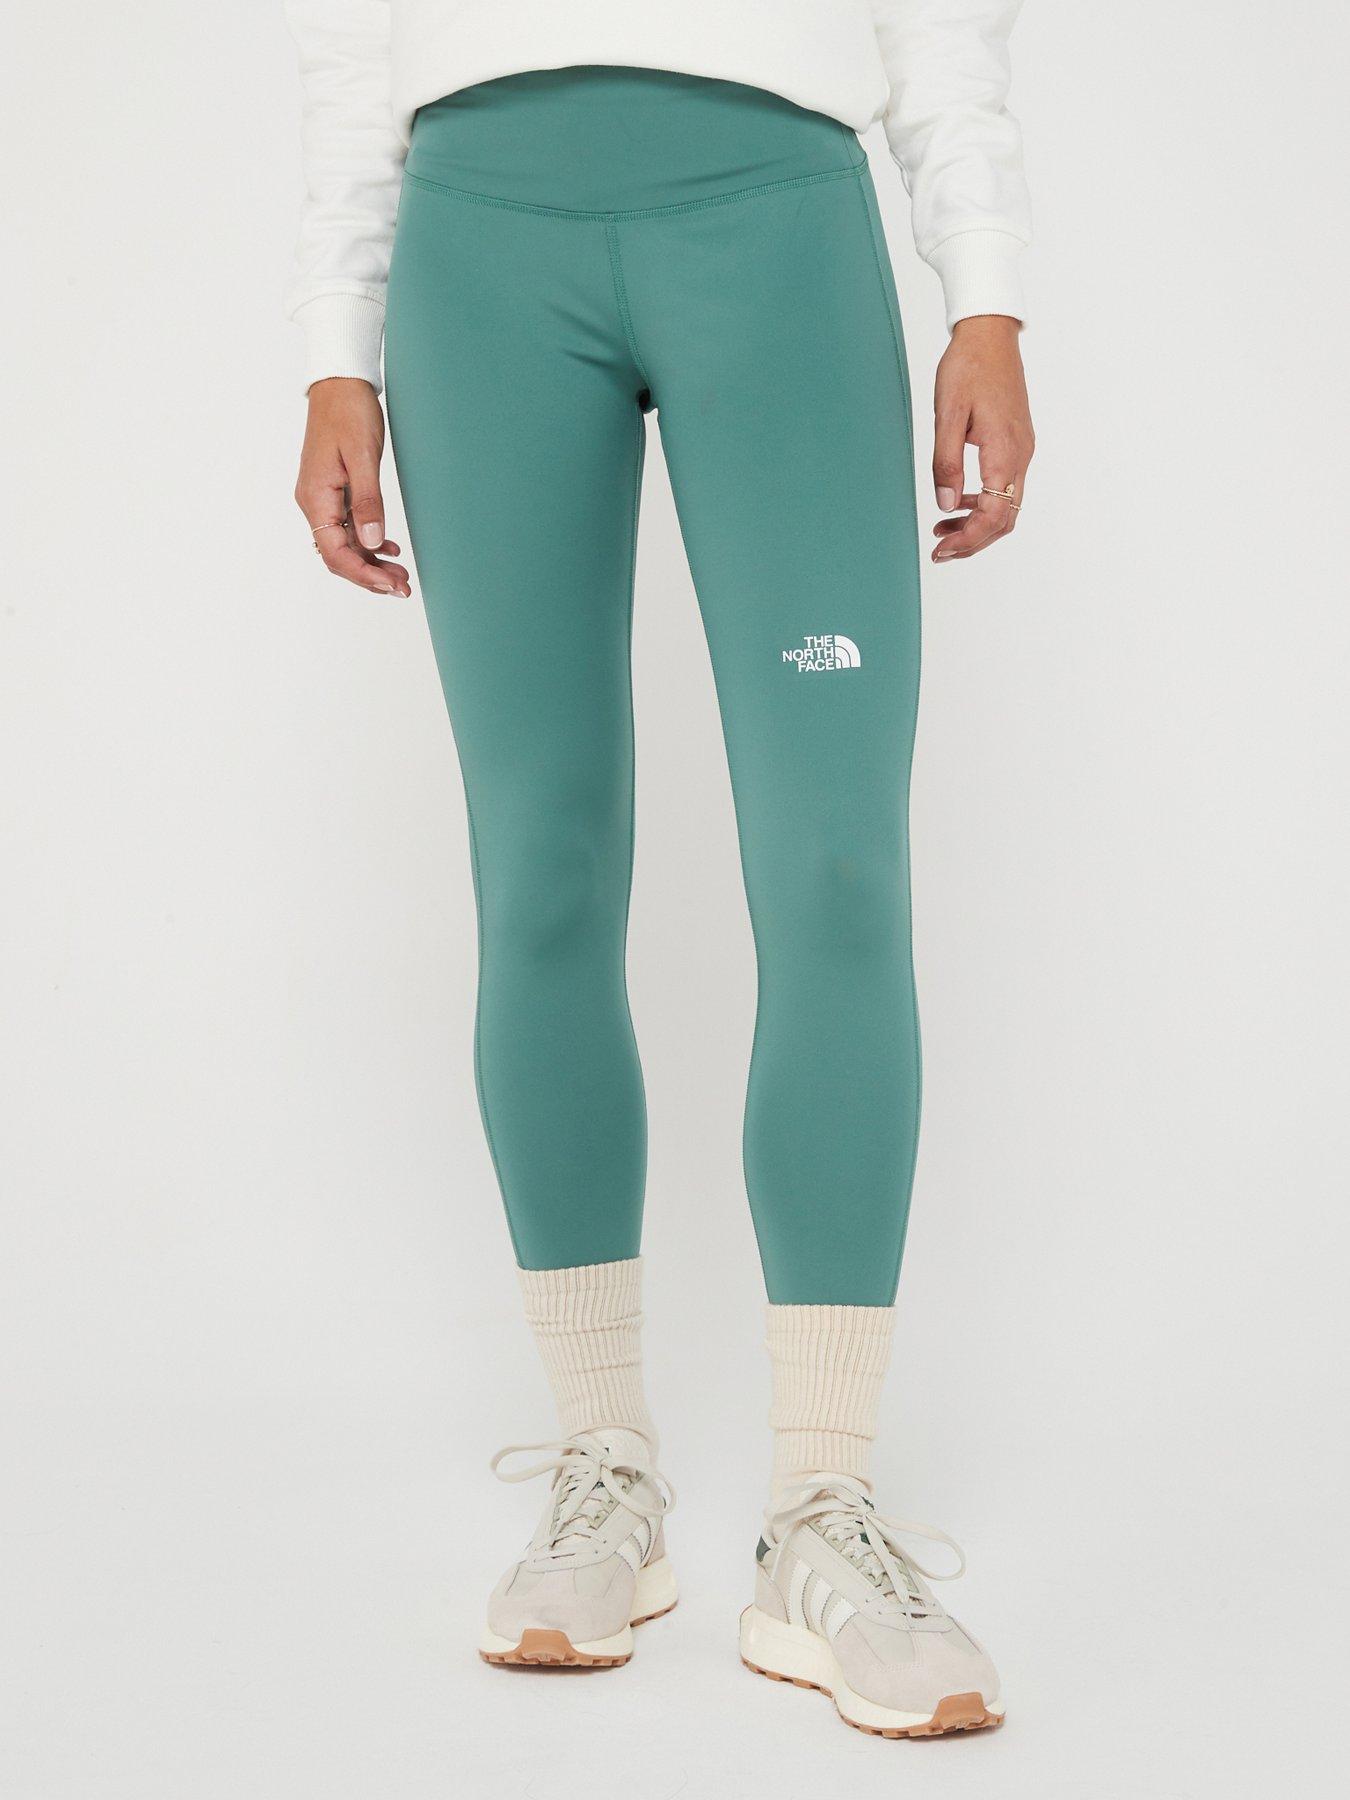 Green, Tights & leggings, Womens sports clothing